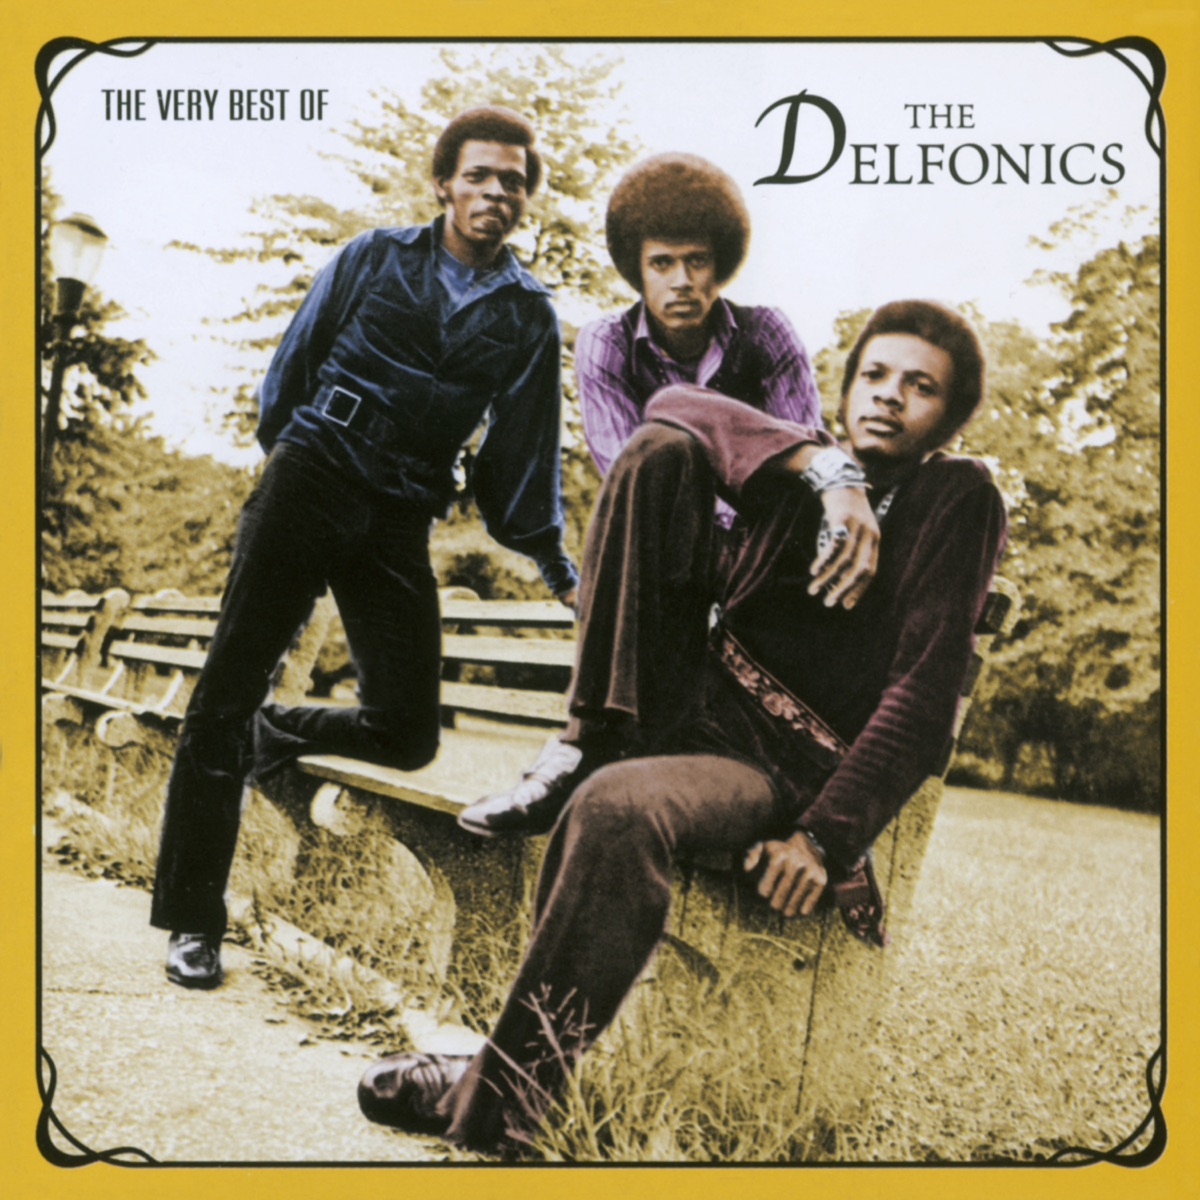 The Delfonics - La la Means I Love You: Definitive Collection - CD